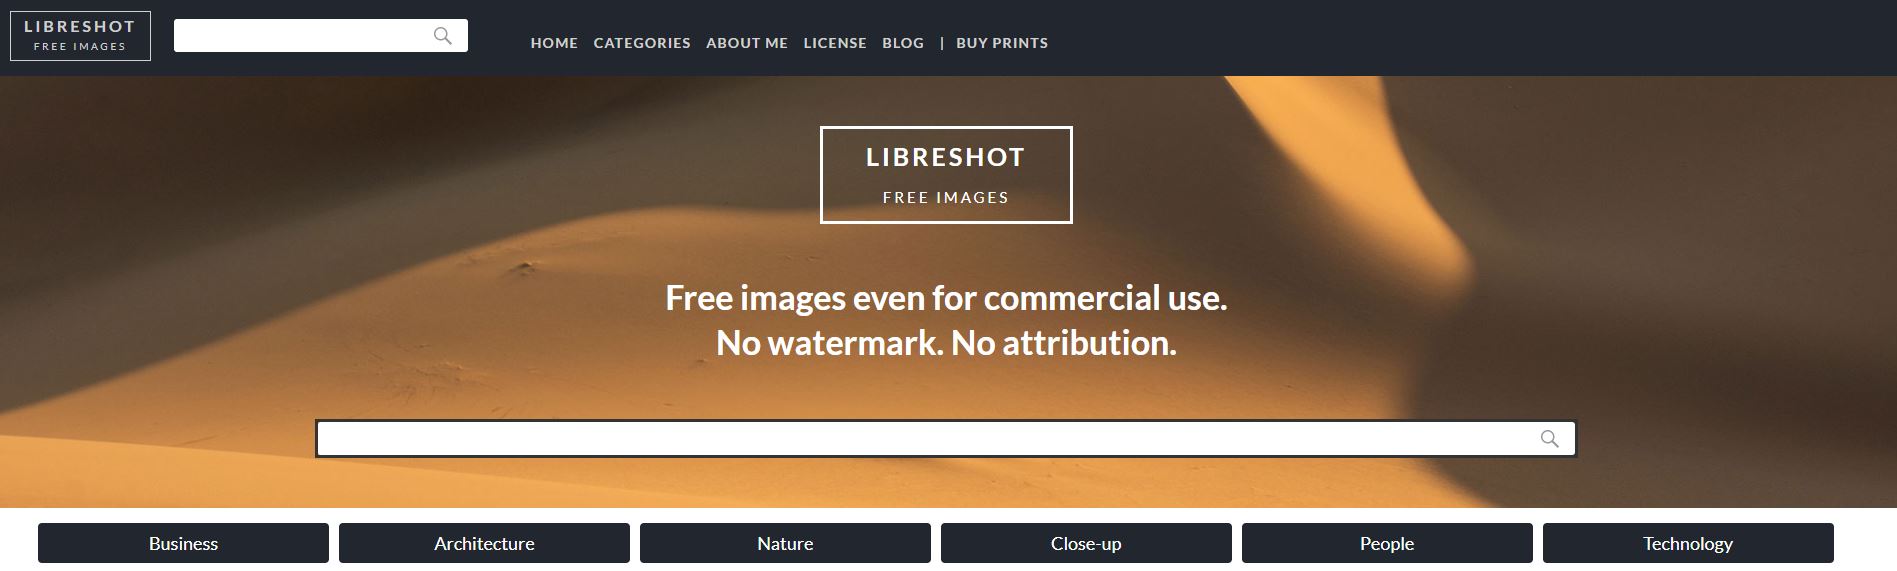 Libreshot free images